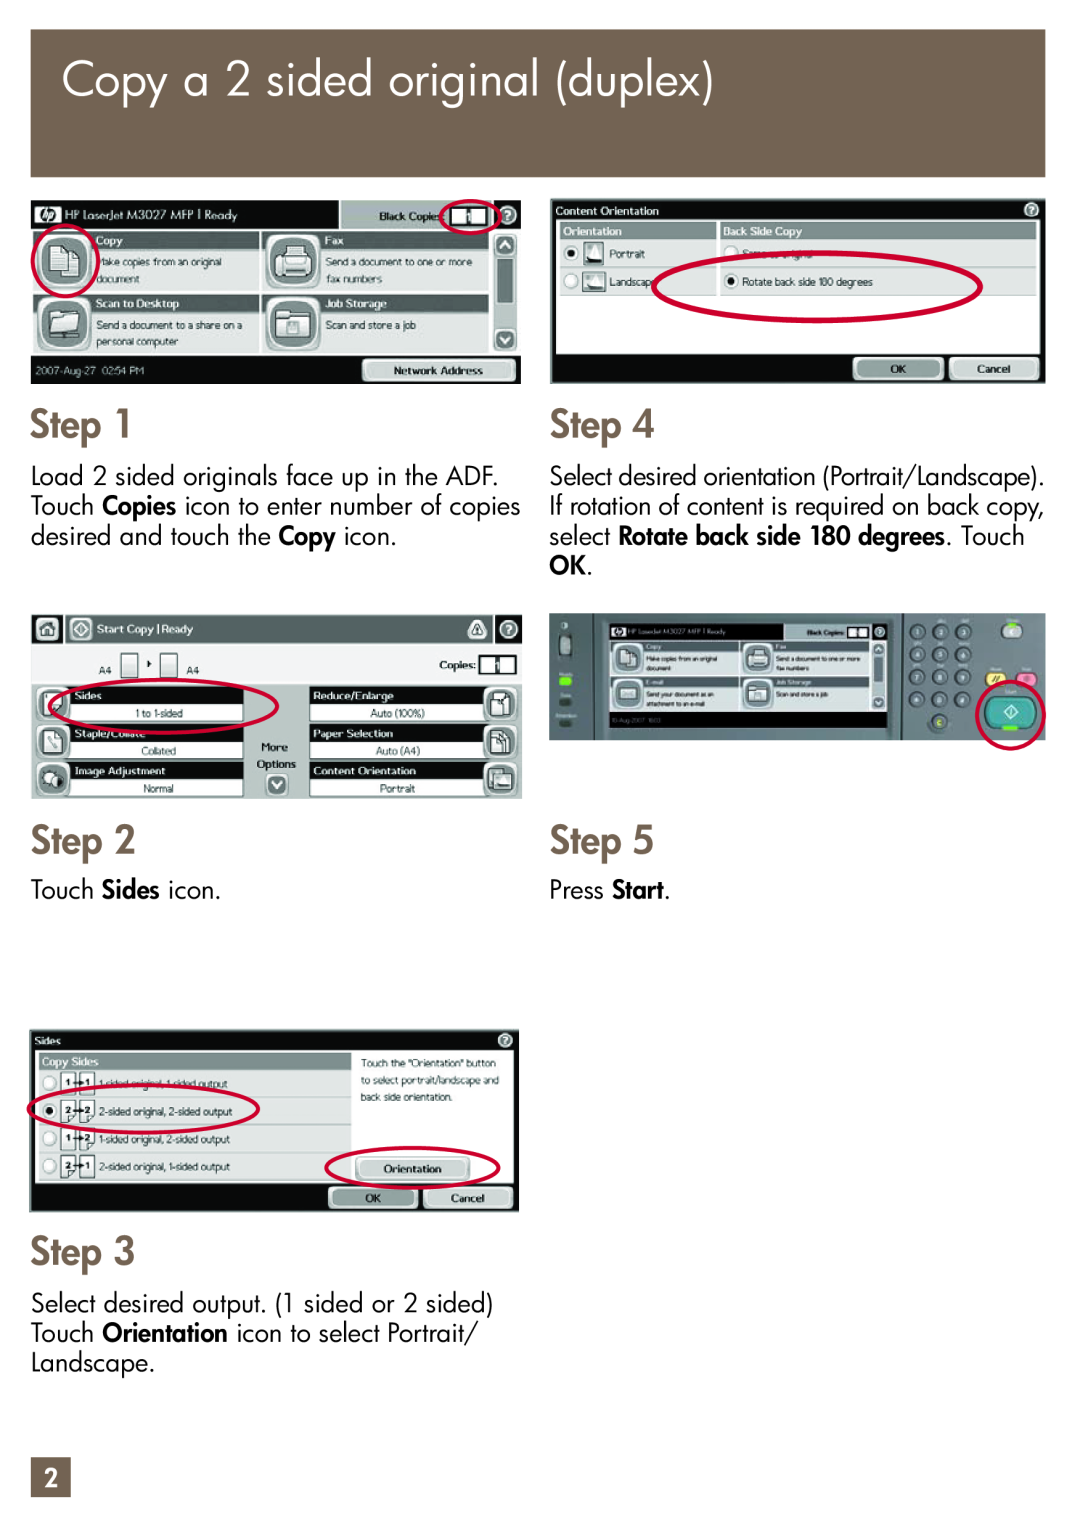 HP M3027x manual Copy a 2 sided original duplex, Step 